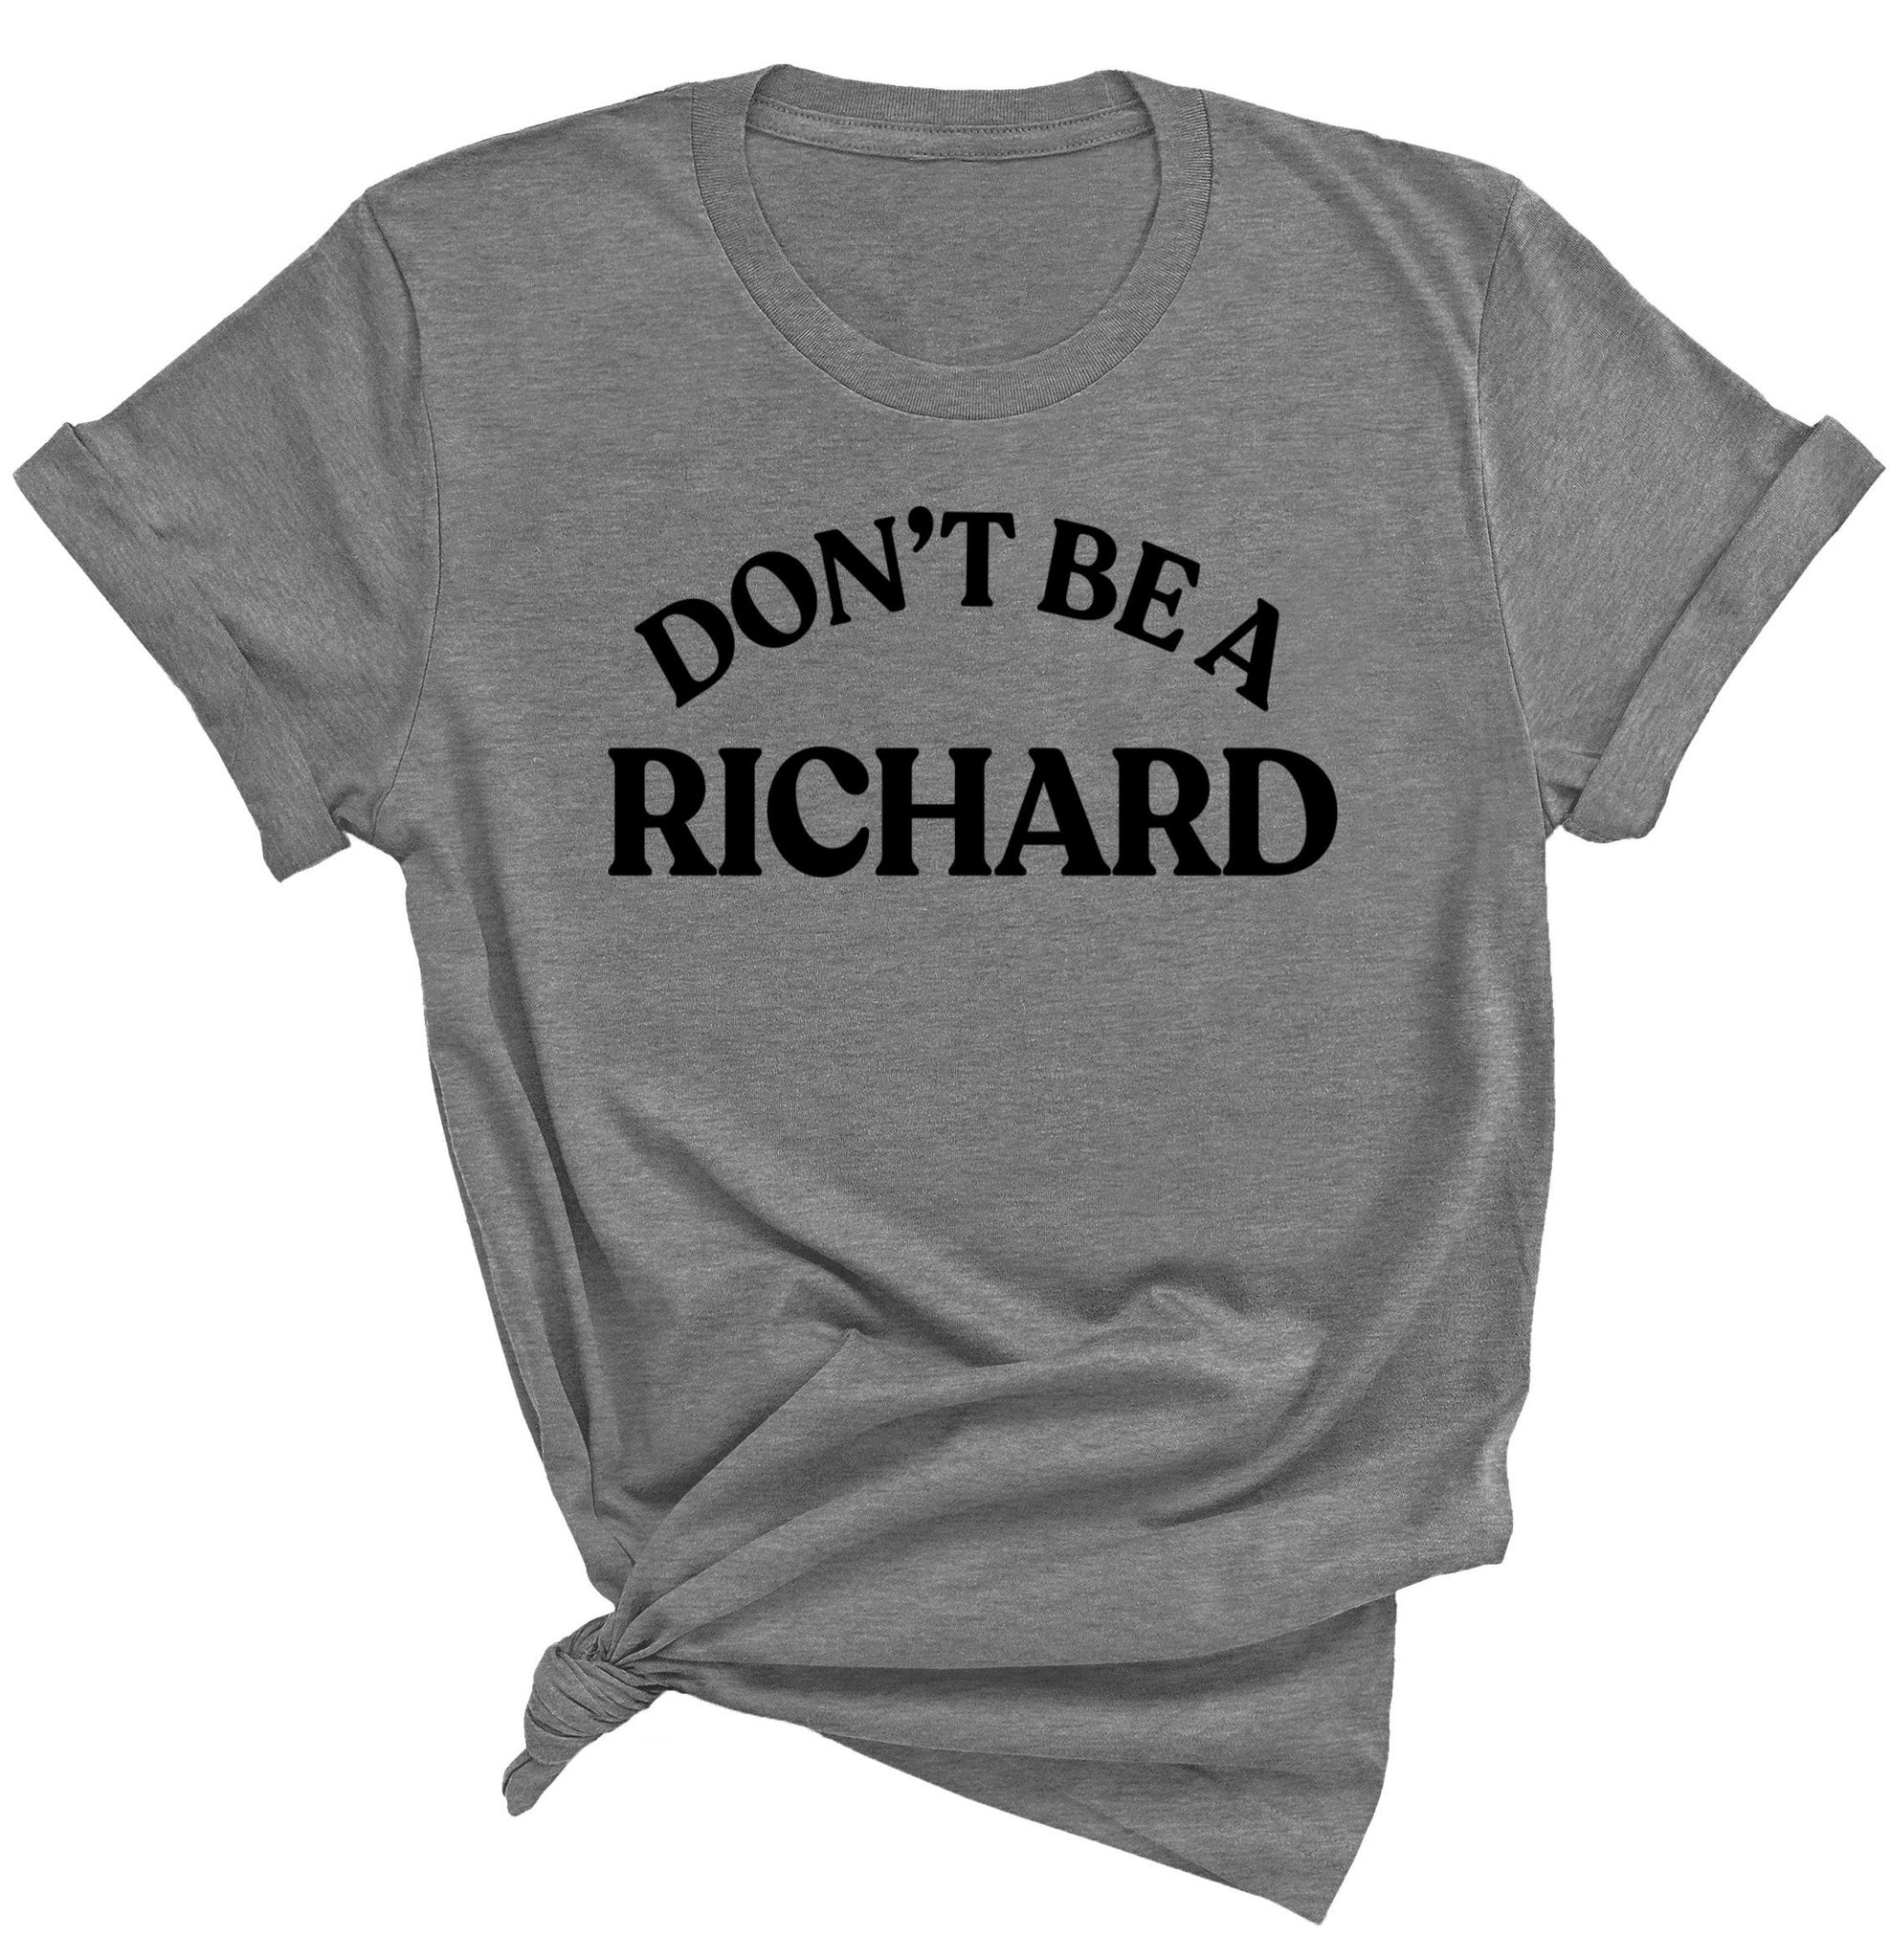 DON'T BE A RICHARD GRAY T-SHIRT